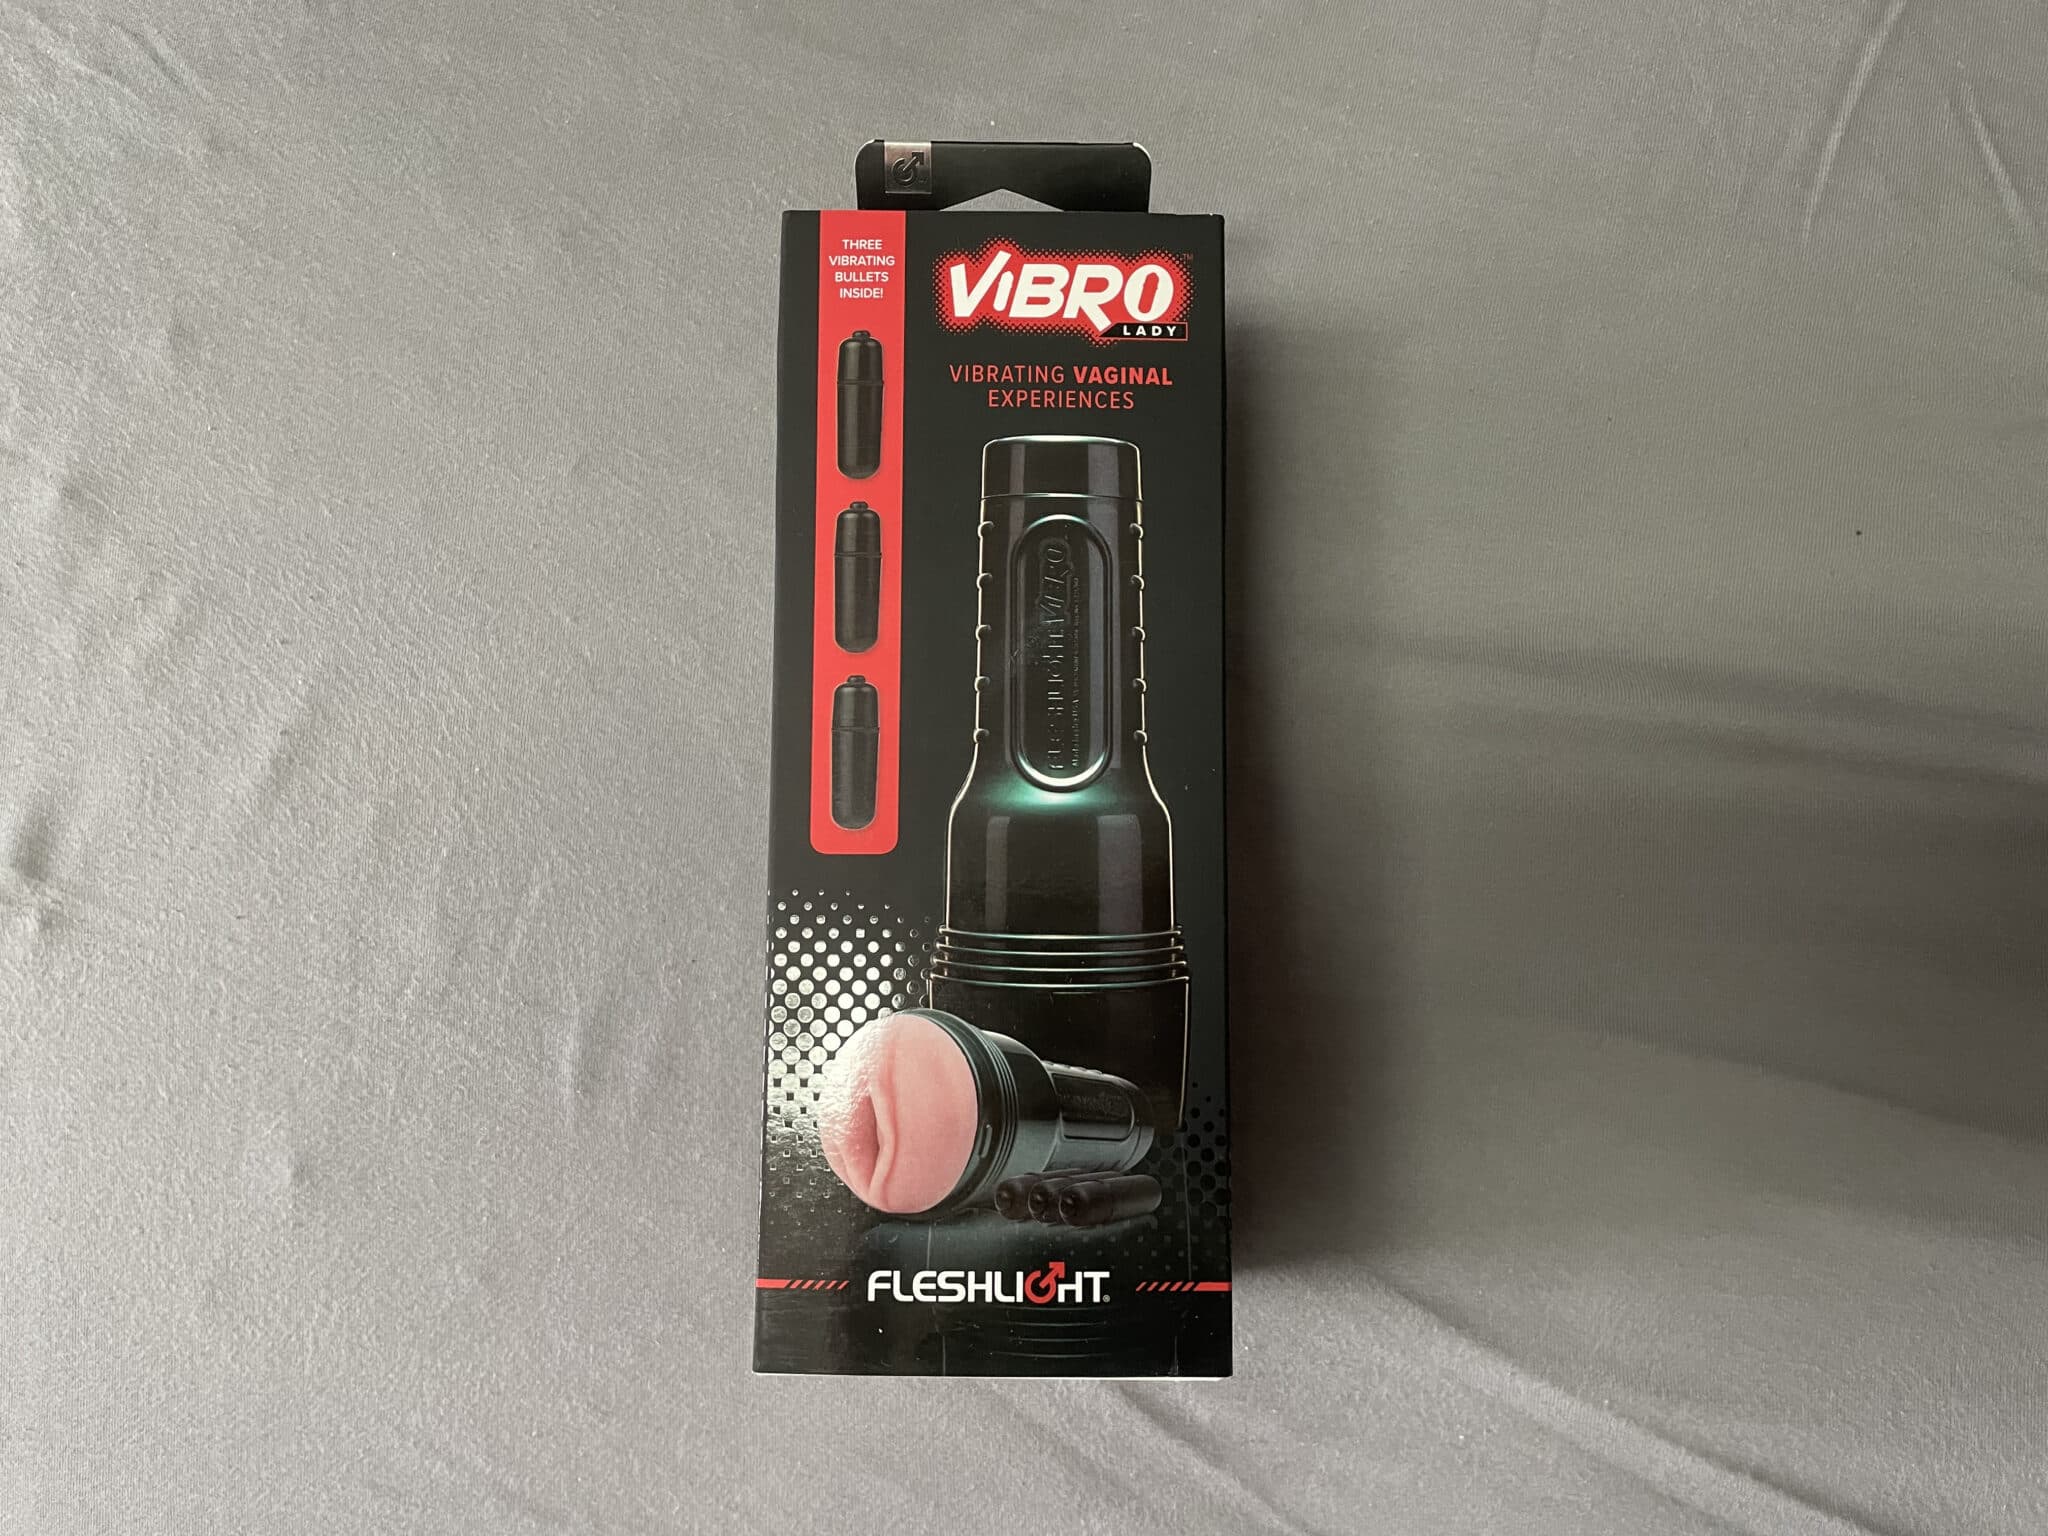 Fleshlight Vibro Evaluating the Fleshlight Vibro’s packaging